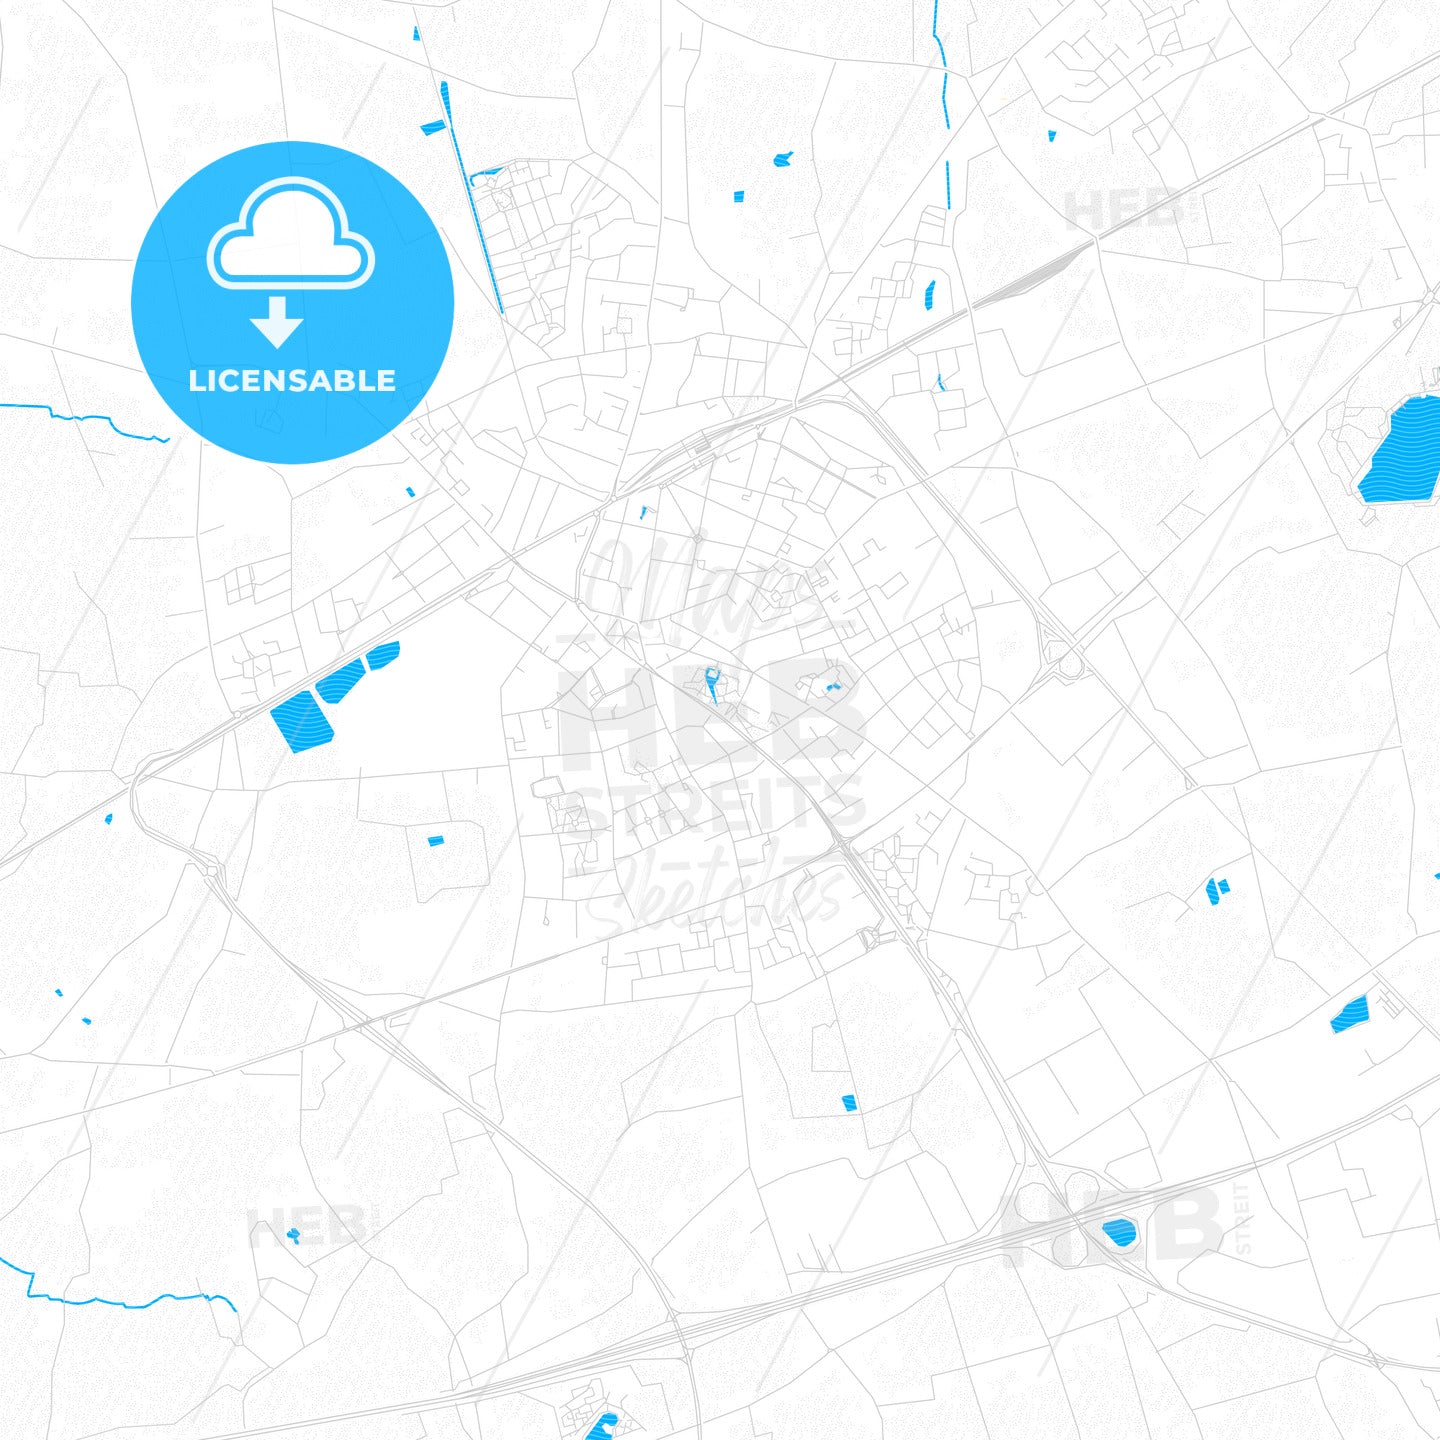 Sint-Niklaas, Belgium PDF vector map with water in focus